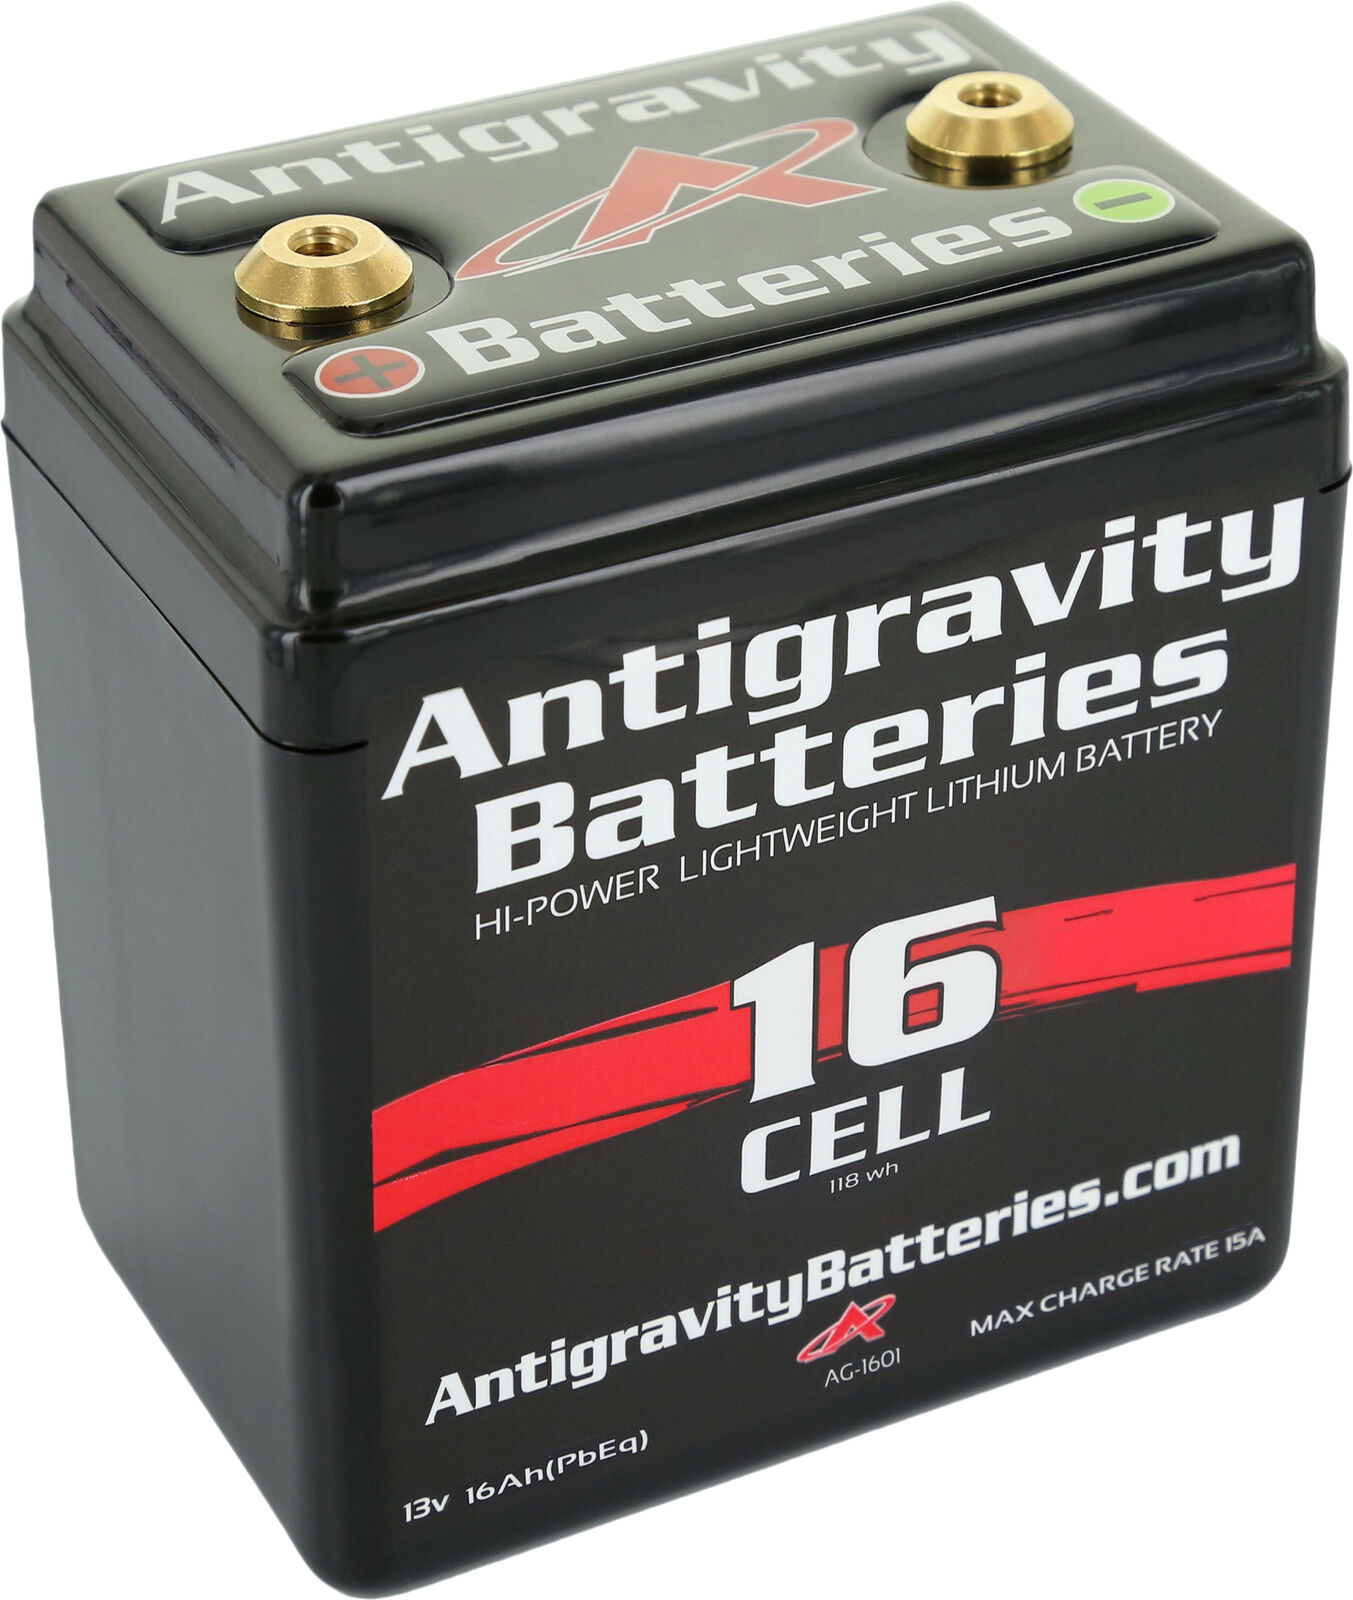 ANTIGRAVITY Light Weight Lithium Motorsport Battery 480 CA 16 Ah 3.1 lbs  AG-1601